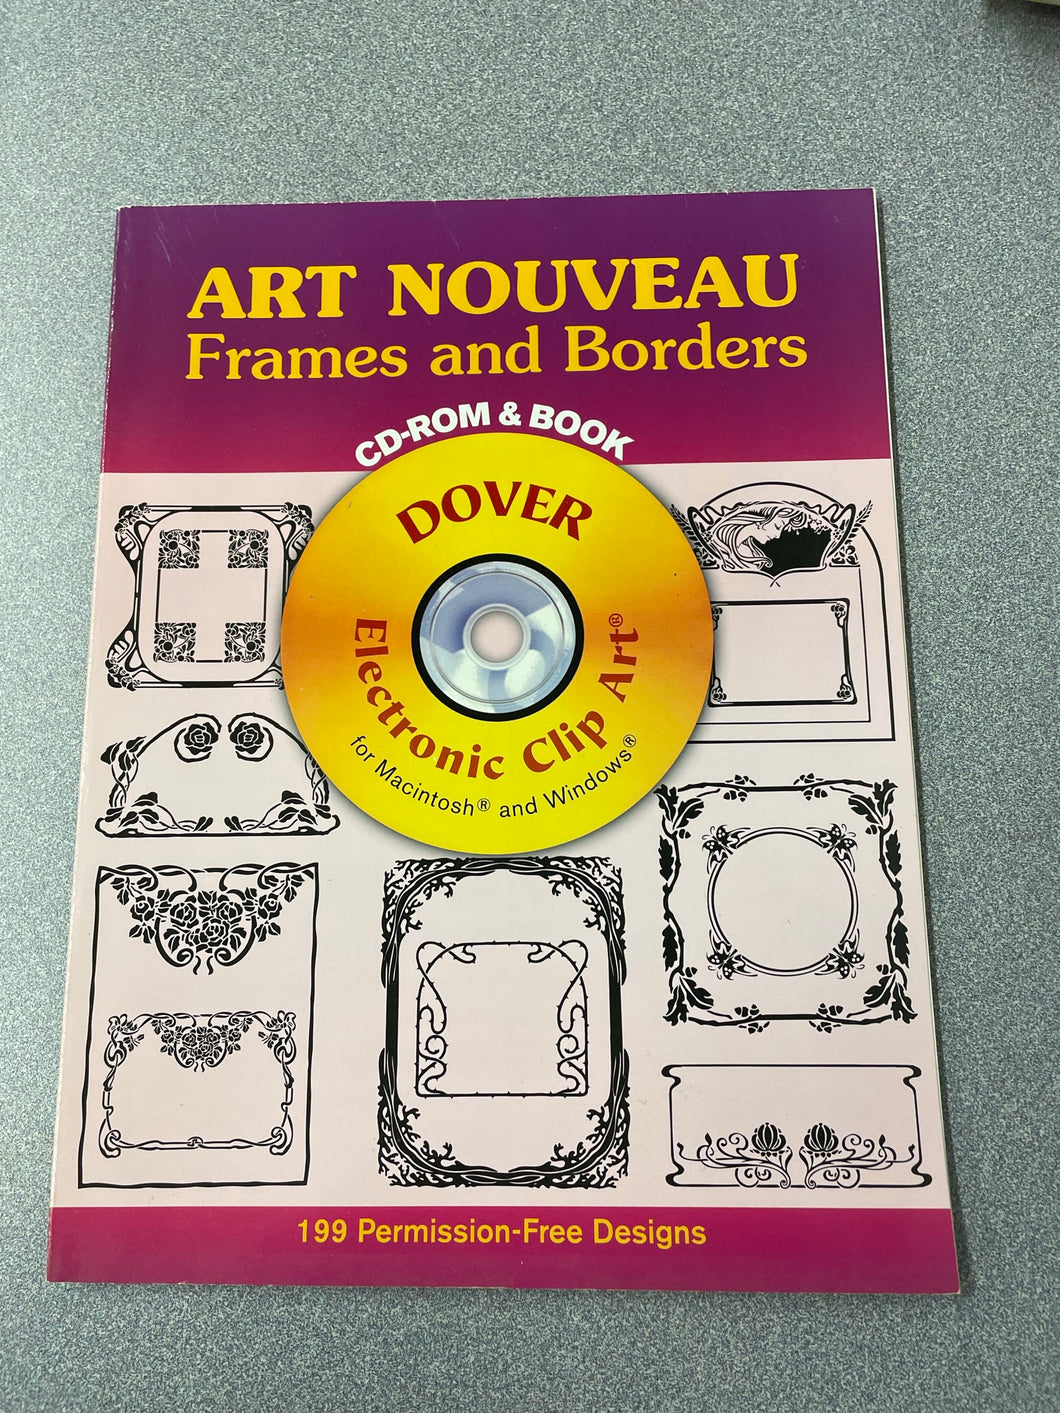 Art Nouveau Frames and Borders: 199 Permission-Free Designs [1997] CG 11/22